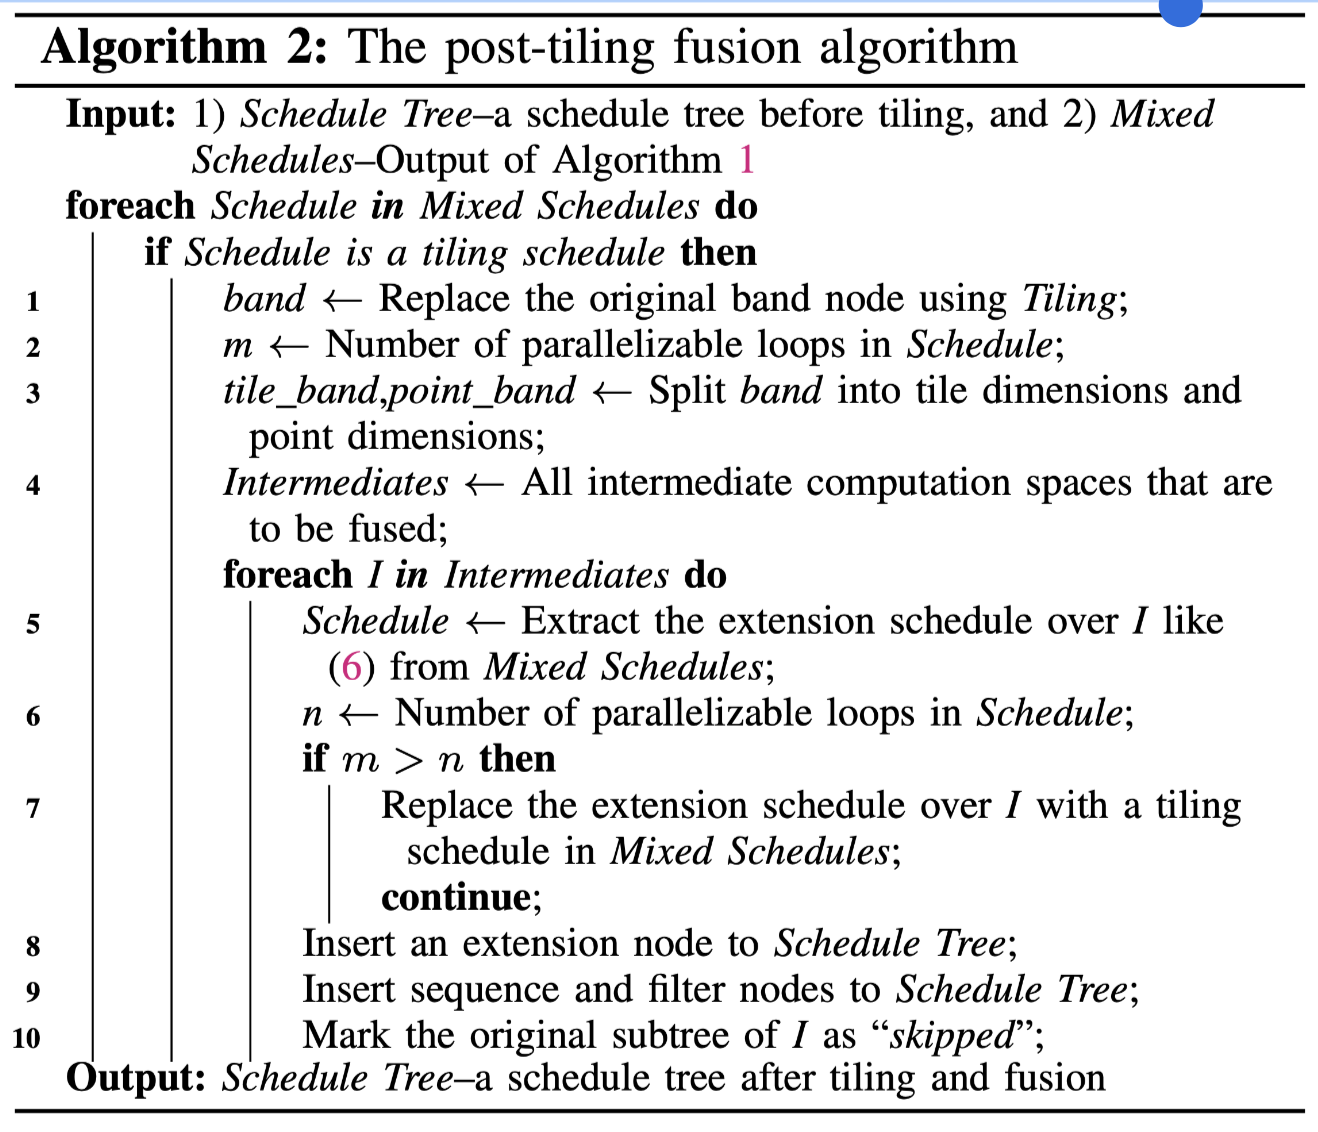 Alg.2: The post-tiling fusion algorithm